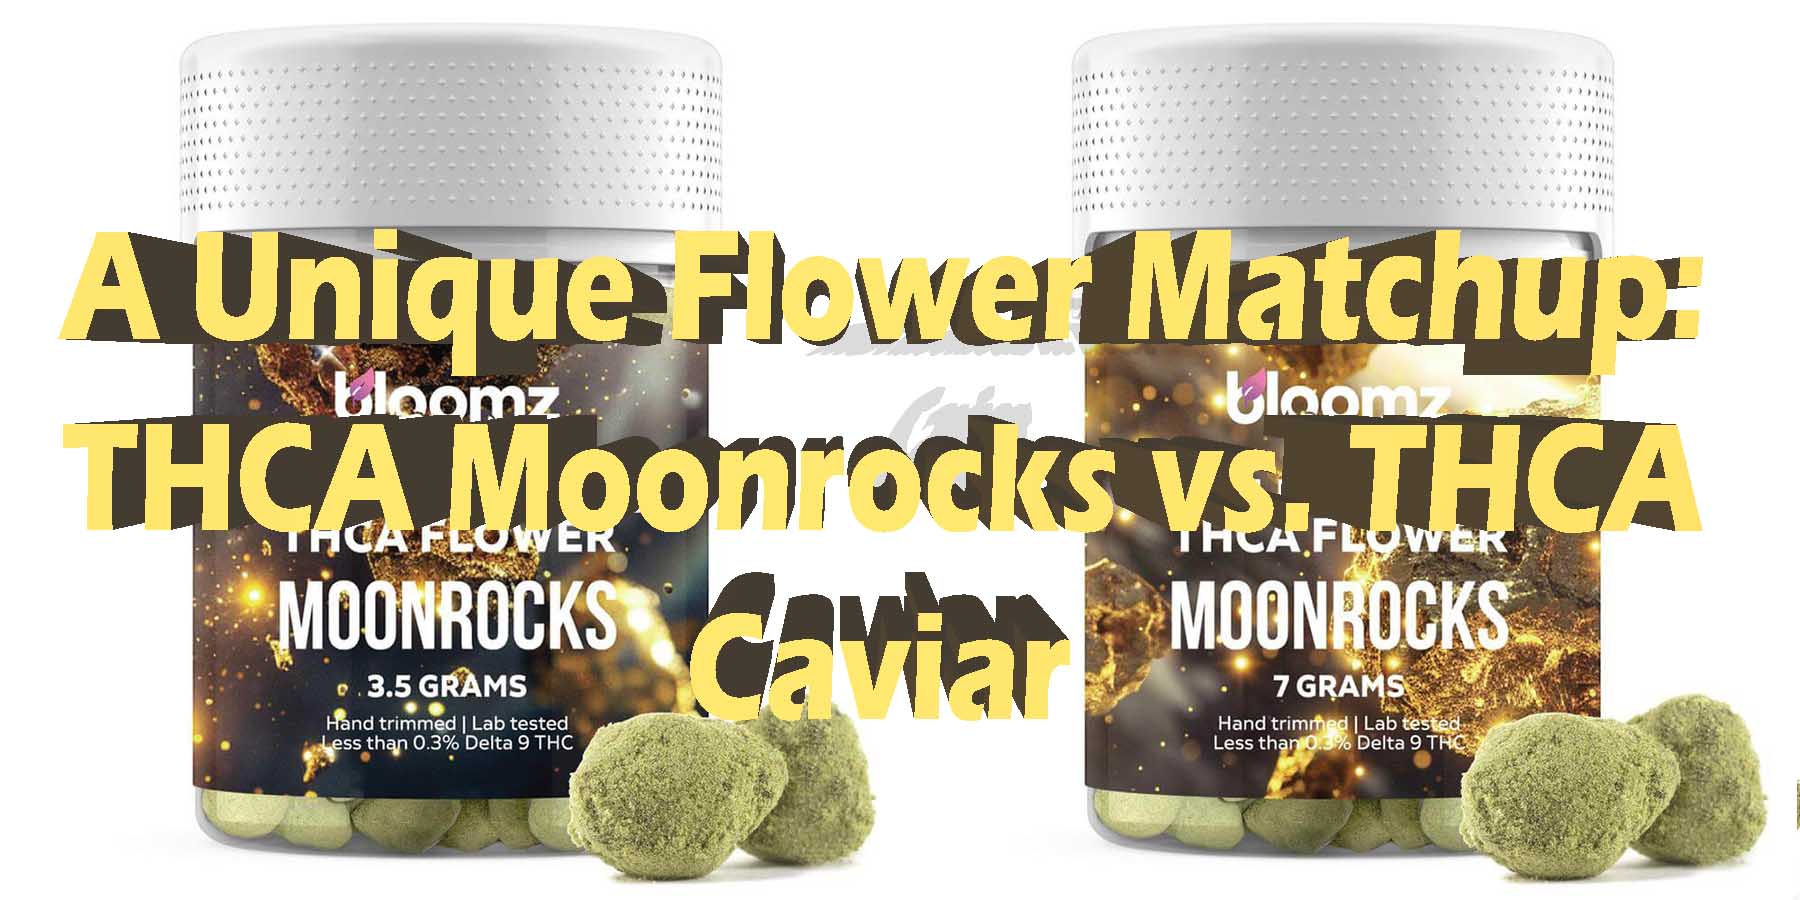 A Unique Flower Matchup THCA Moonrocks vs Caviar Coupon Discount For Smoking Best High Smoke THCA THC Cannabinoids Shop Online Near Me Bloomz